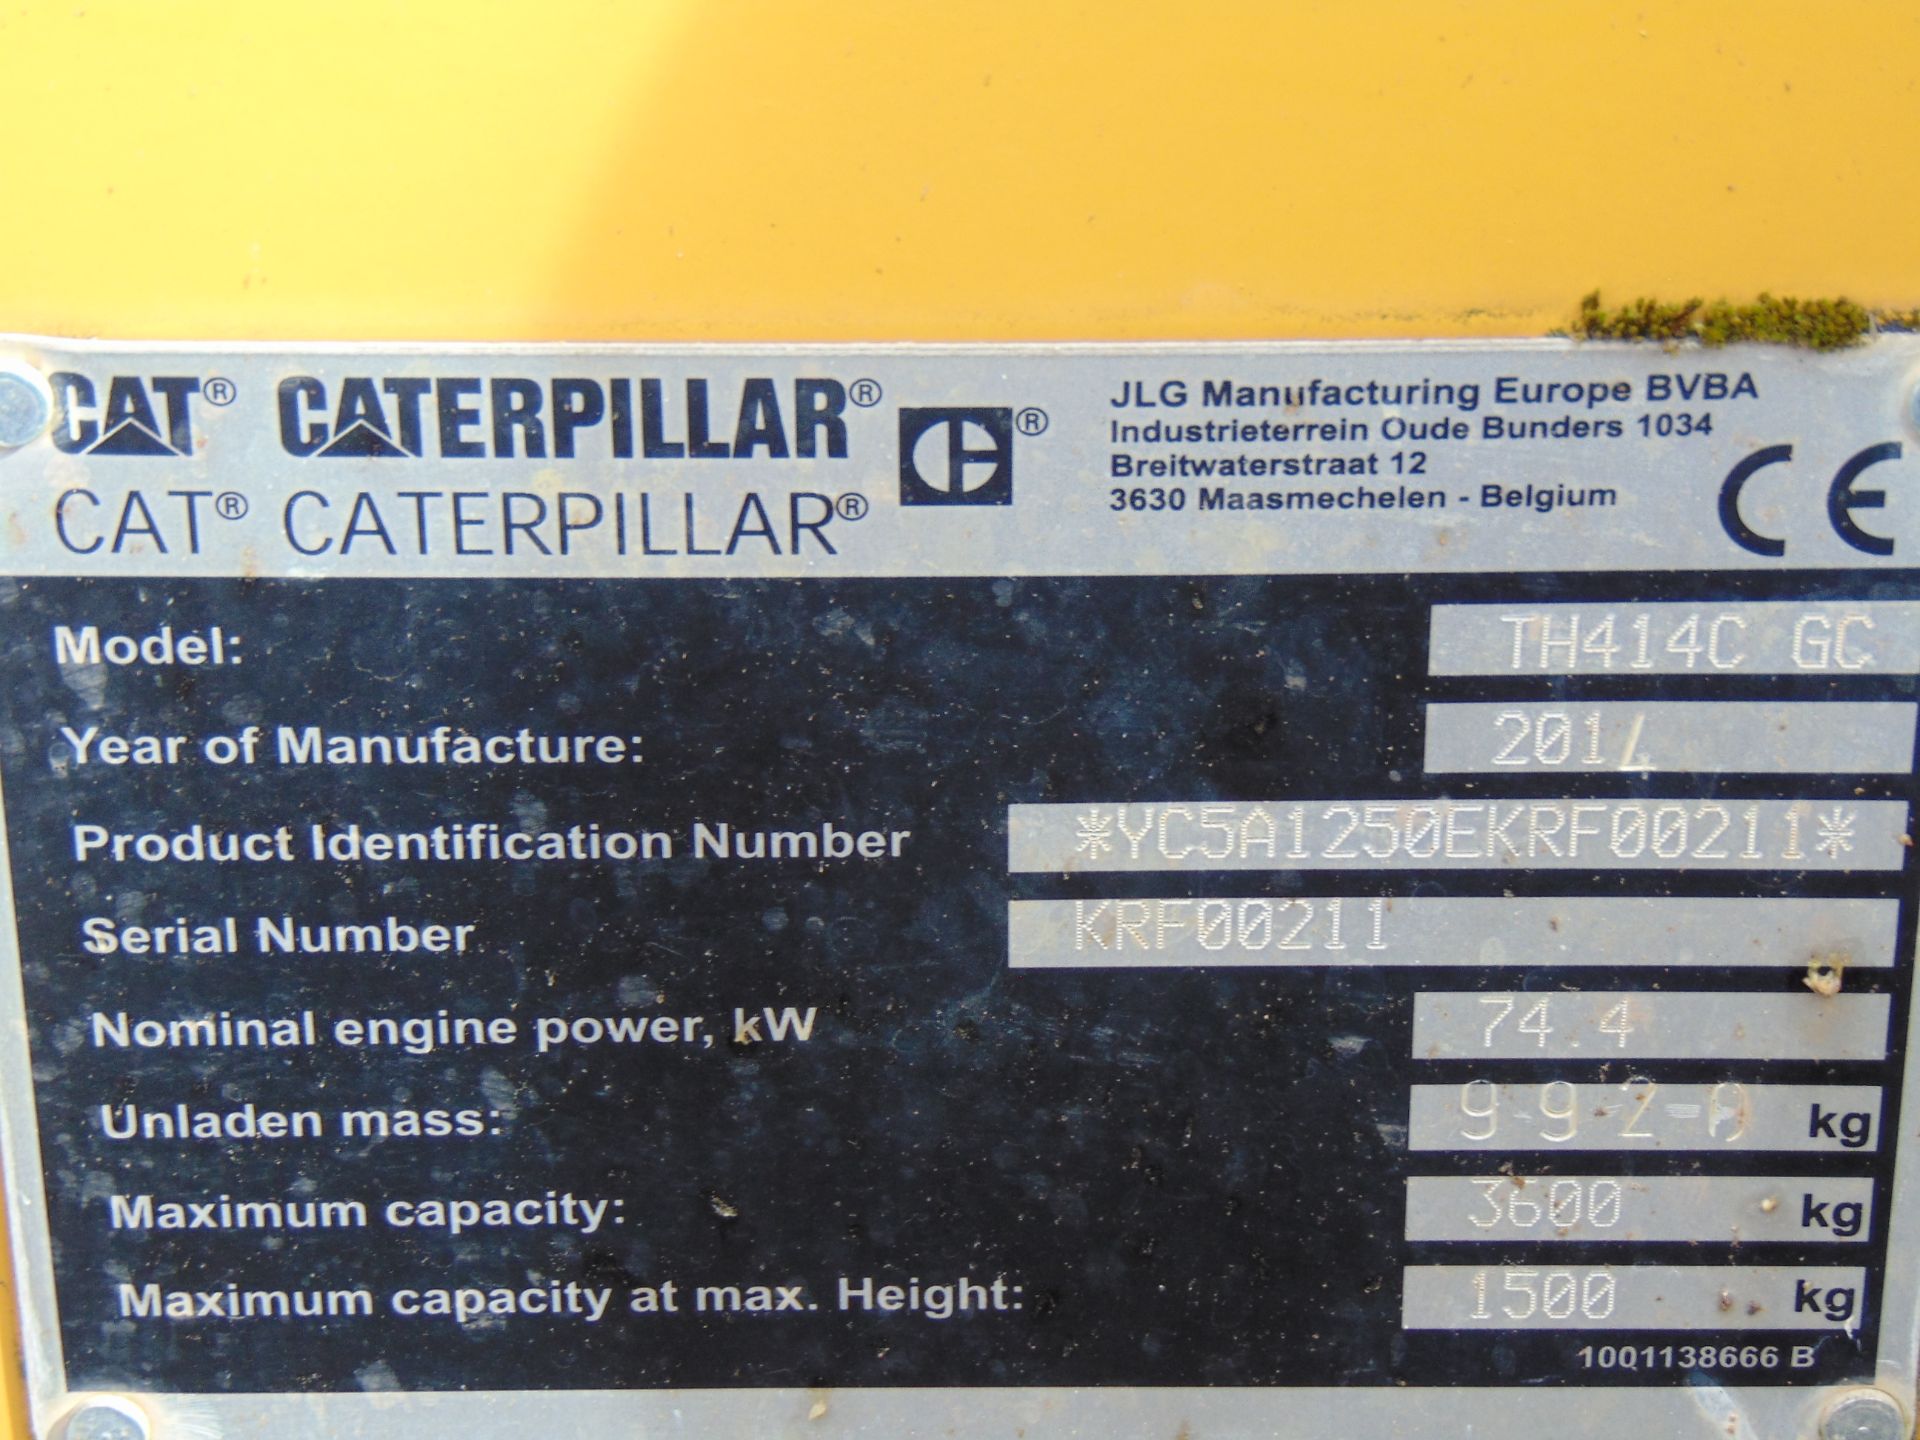 2014 Caterpillar TH414C GC 3.6 ton Telehandler - Image 16 of 18